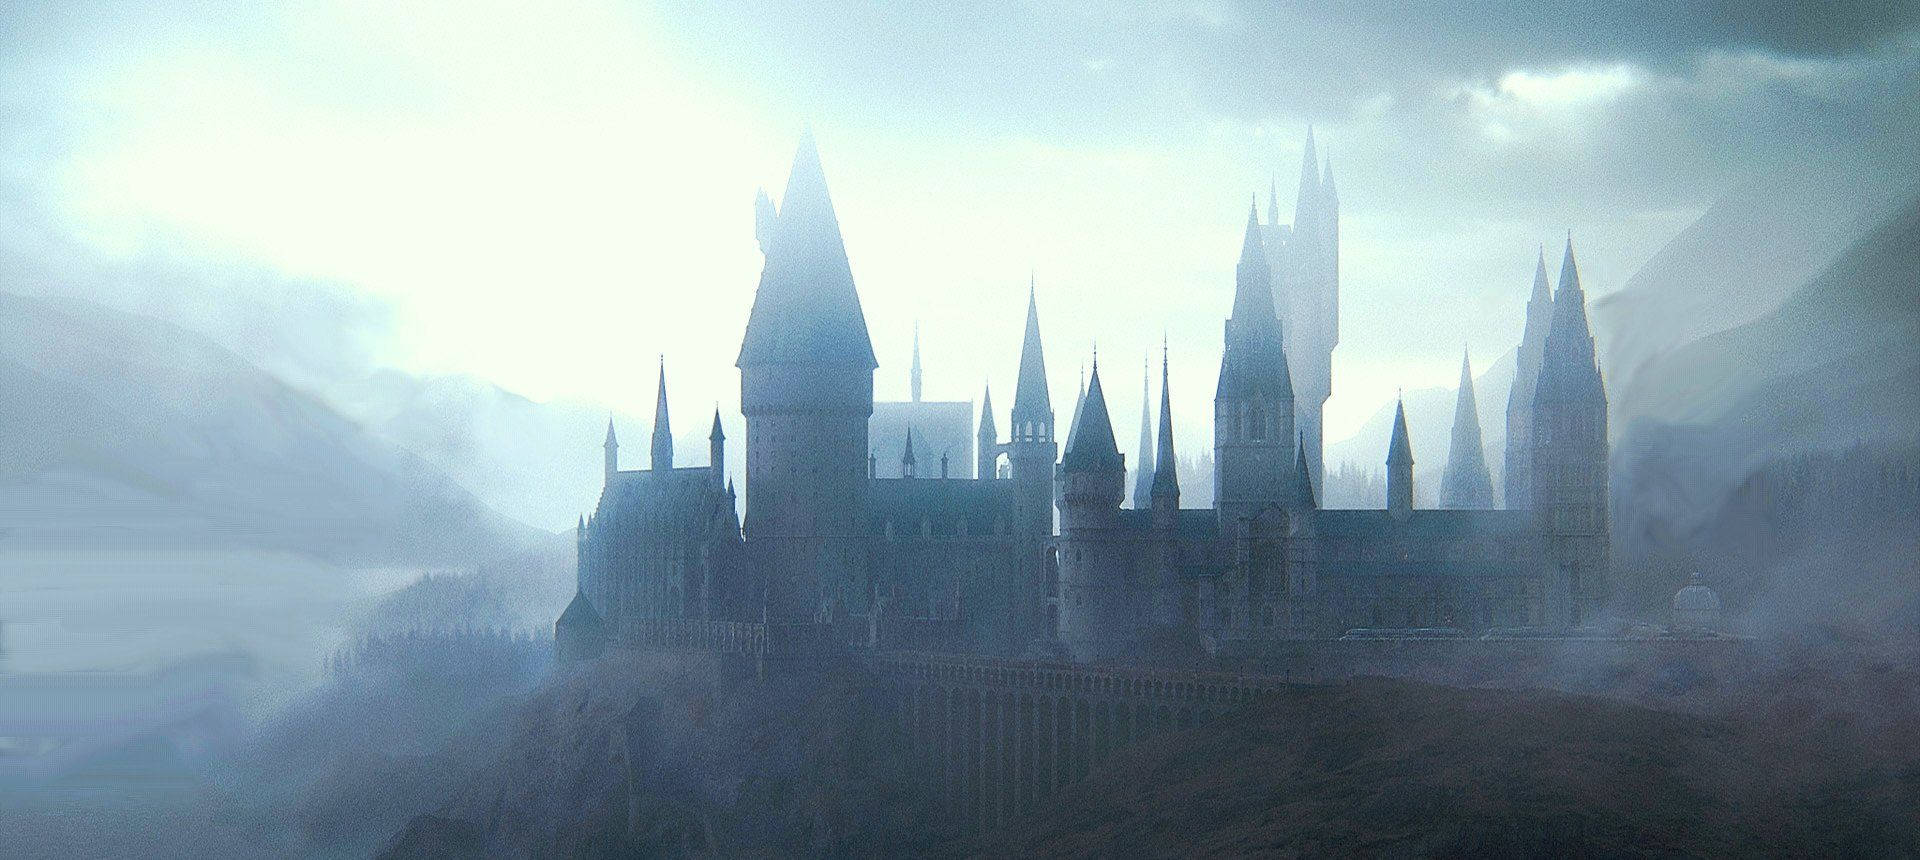 Hogwarts Castle In Mist